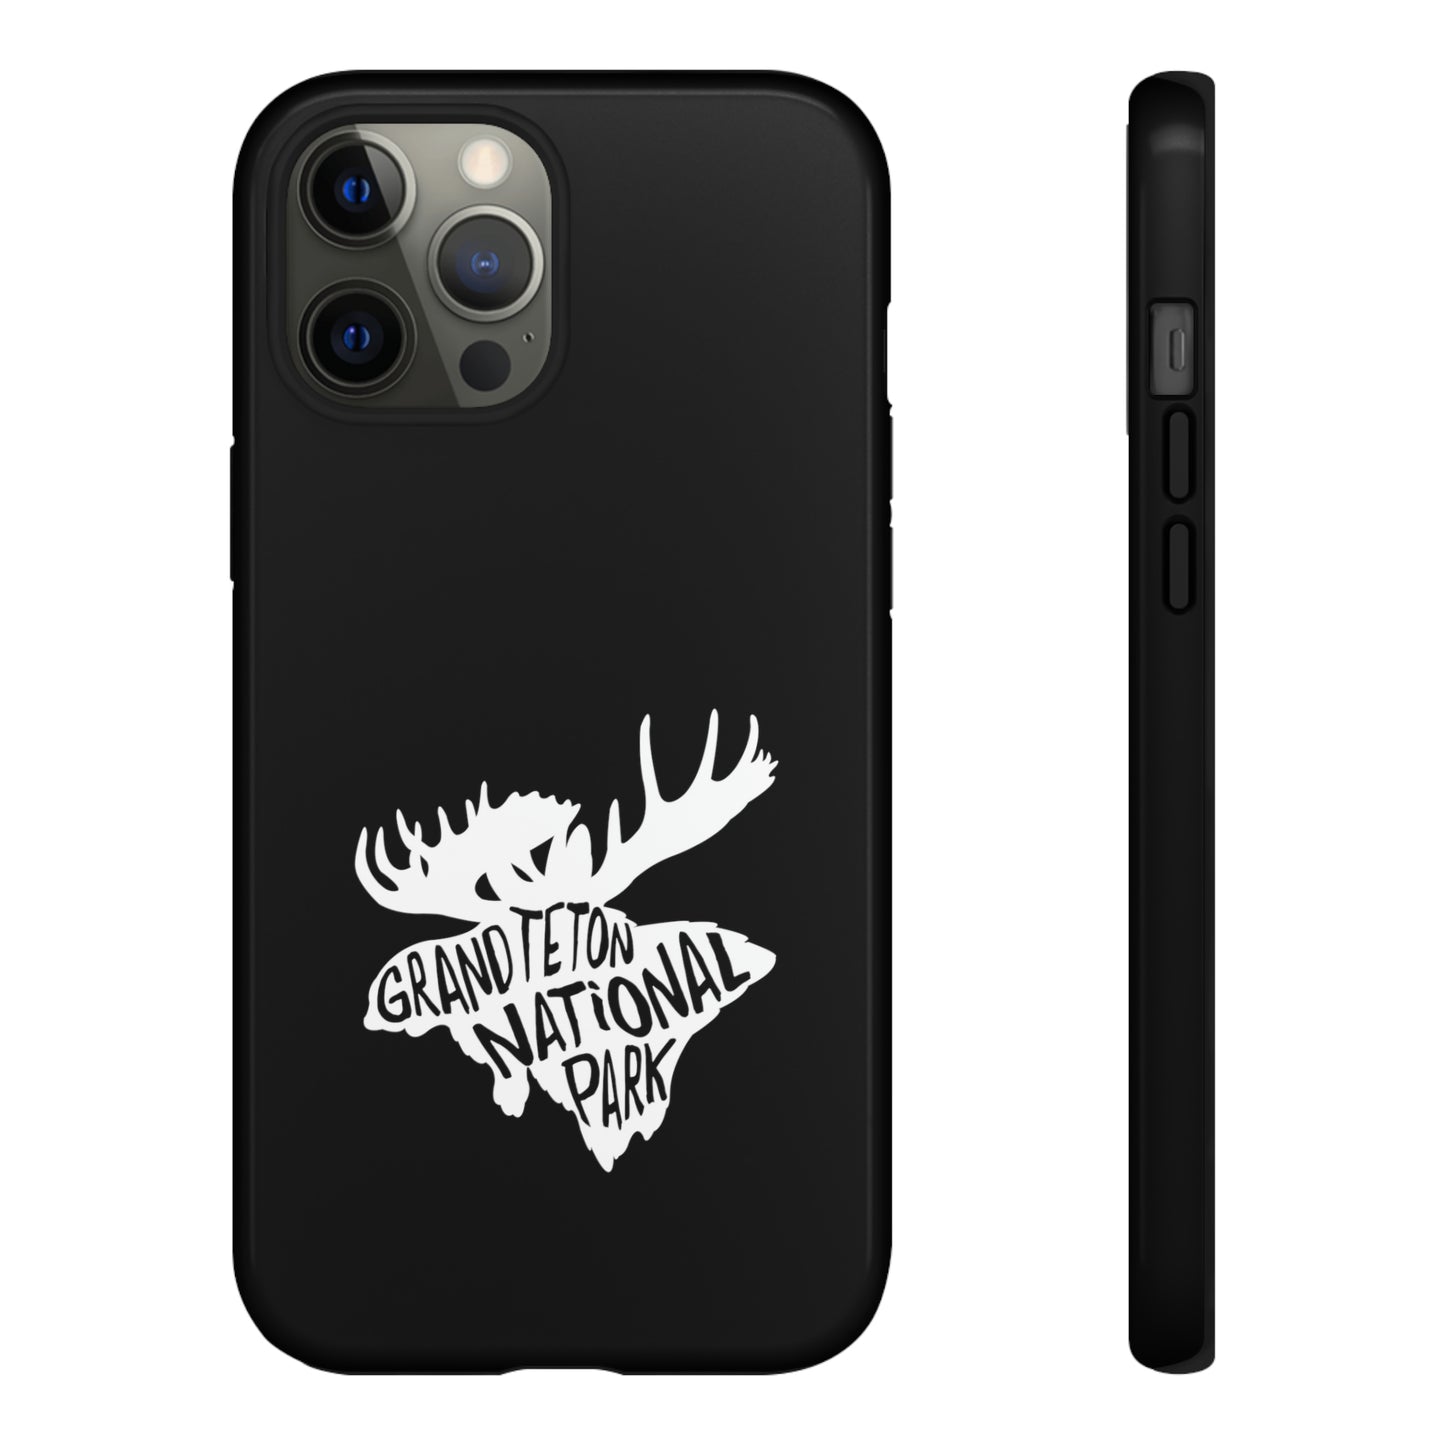 Grand Teton National Park Phone Case - Moose Design